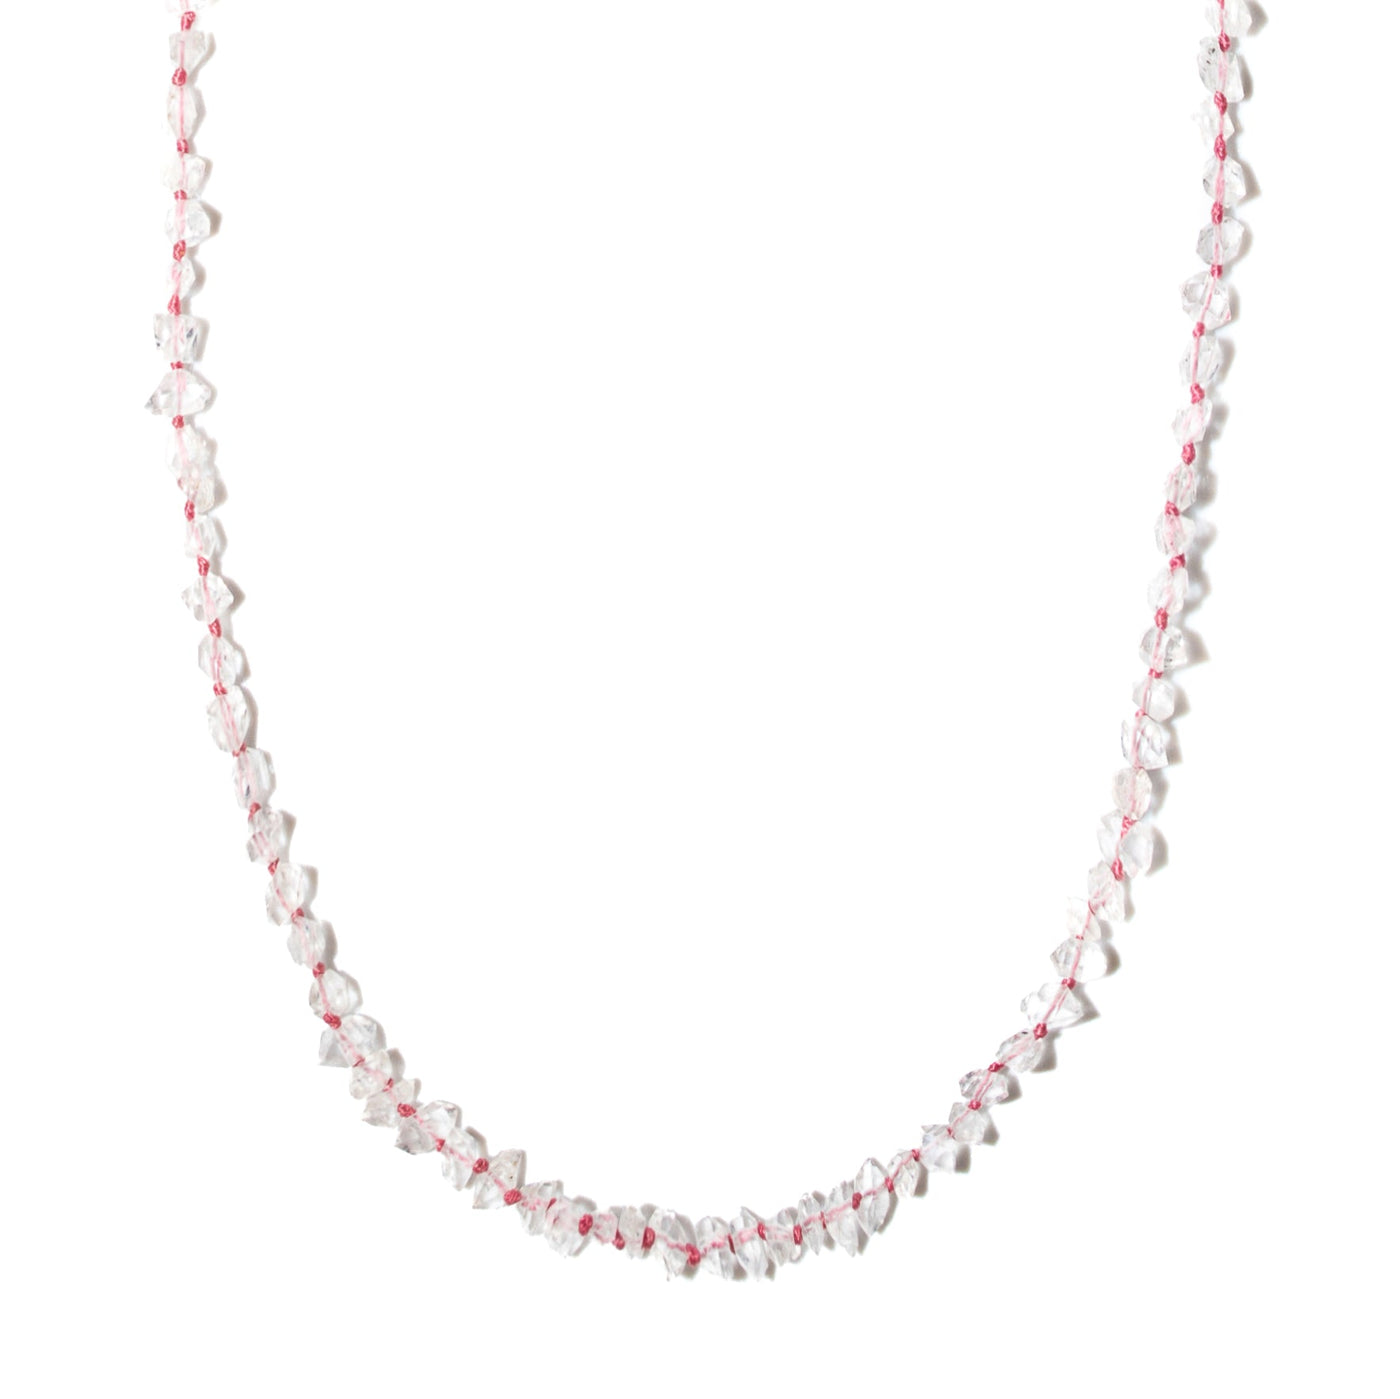 Hackamore Diamond Necklace with Teardrop Pendant